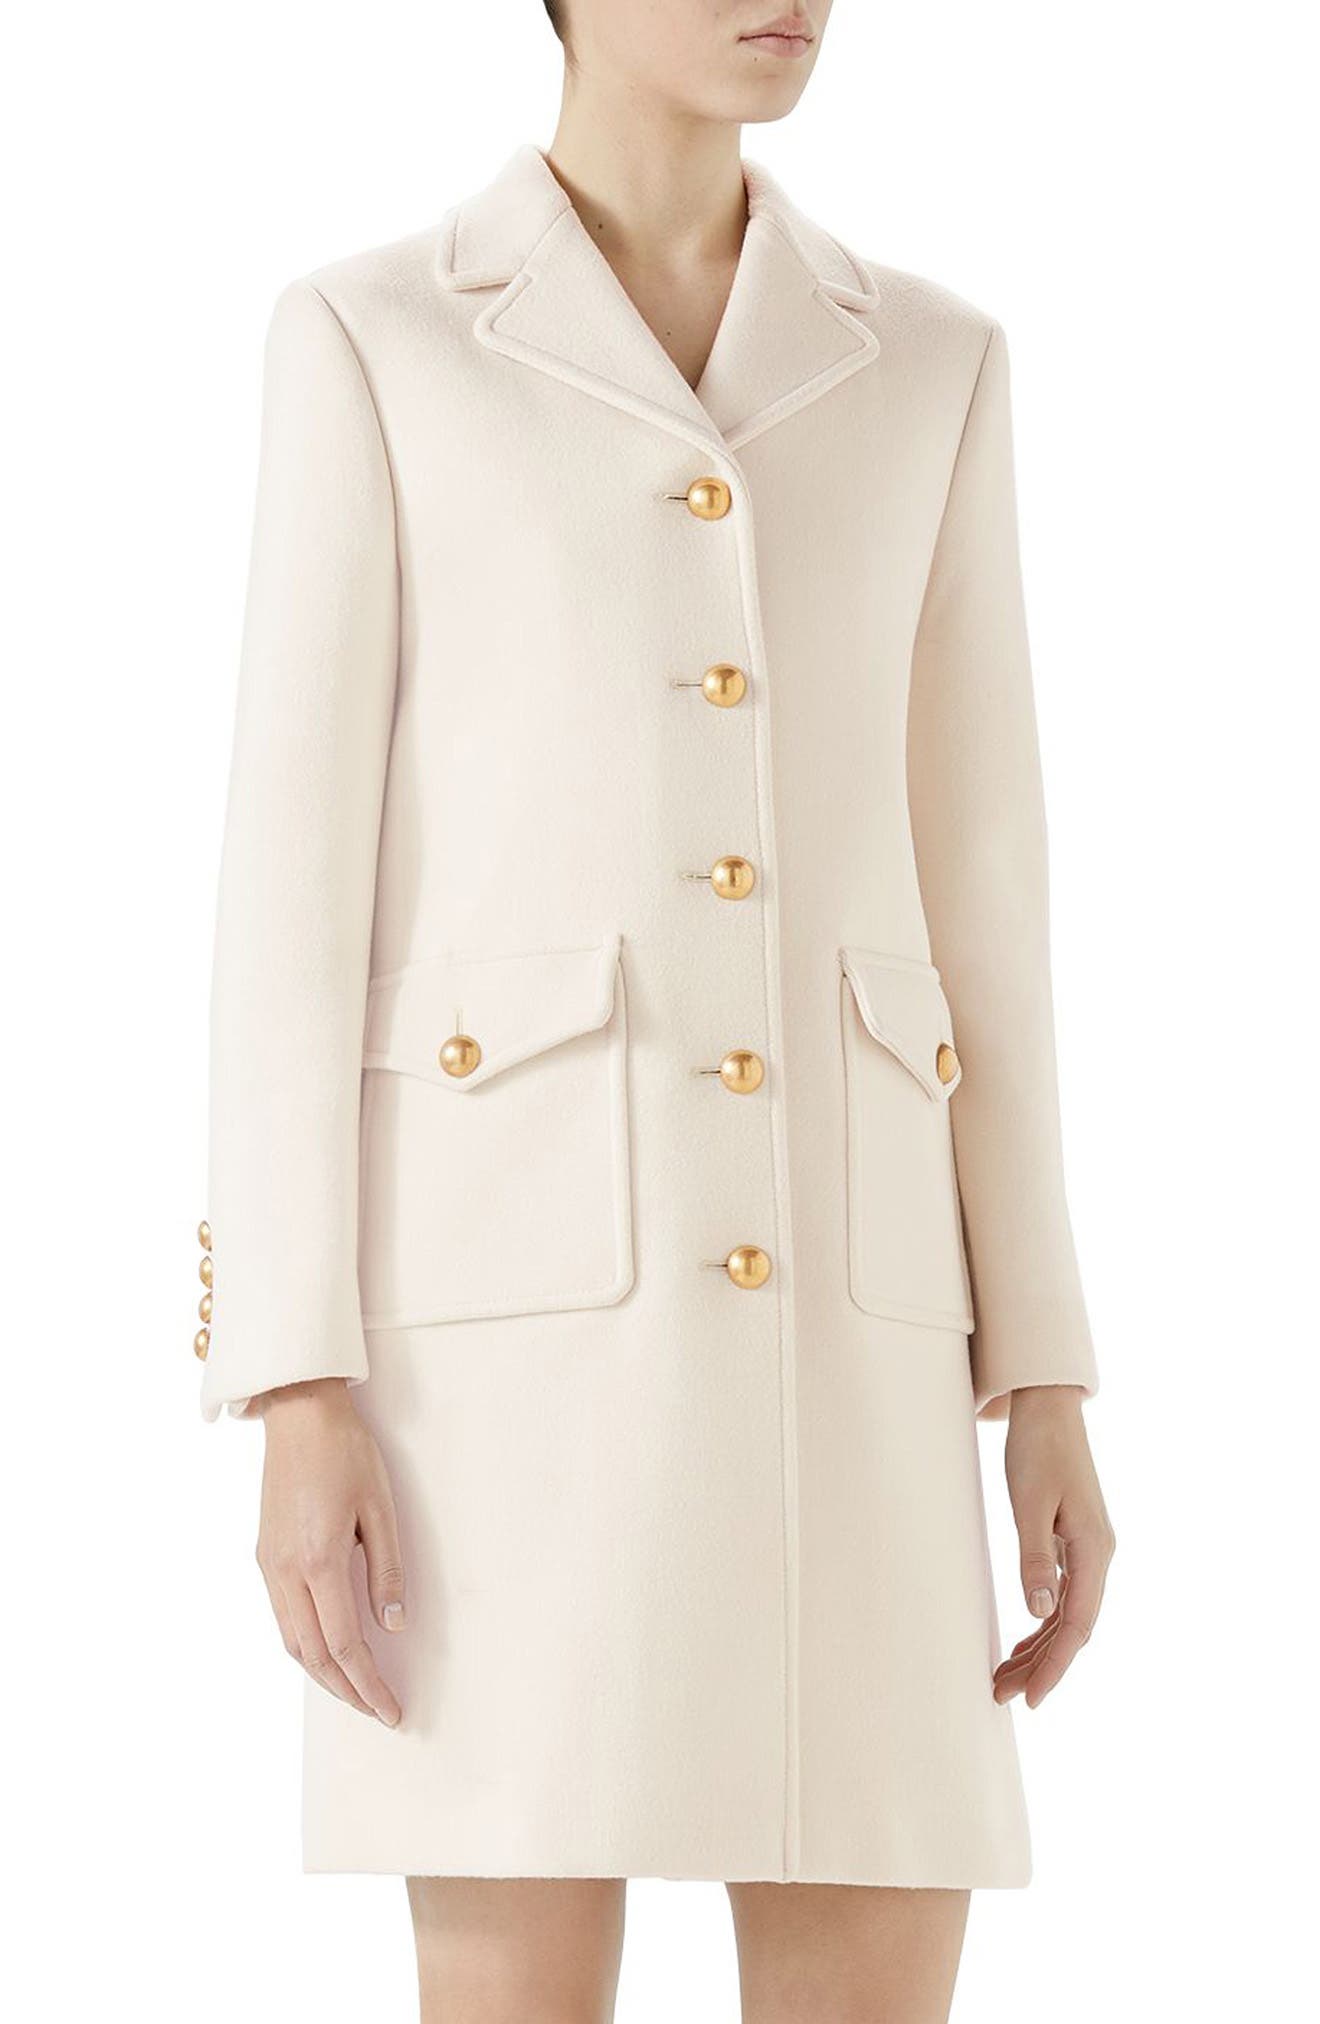 gucci jacket womens sale, OFF 73%,www 